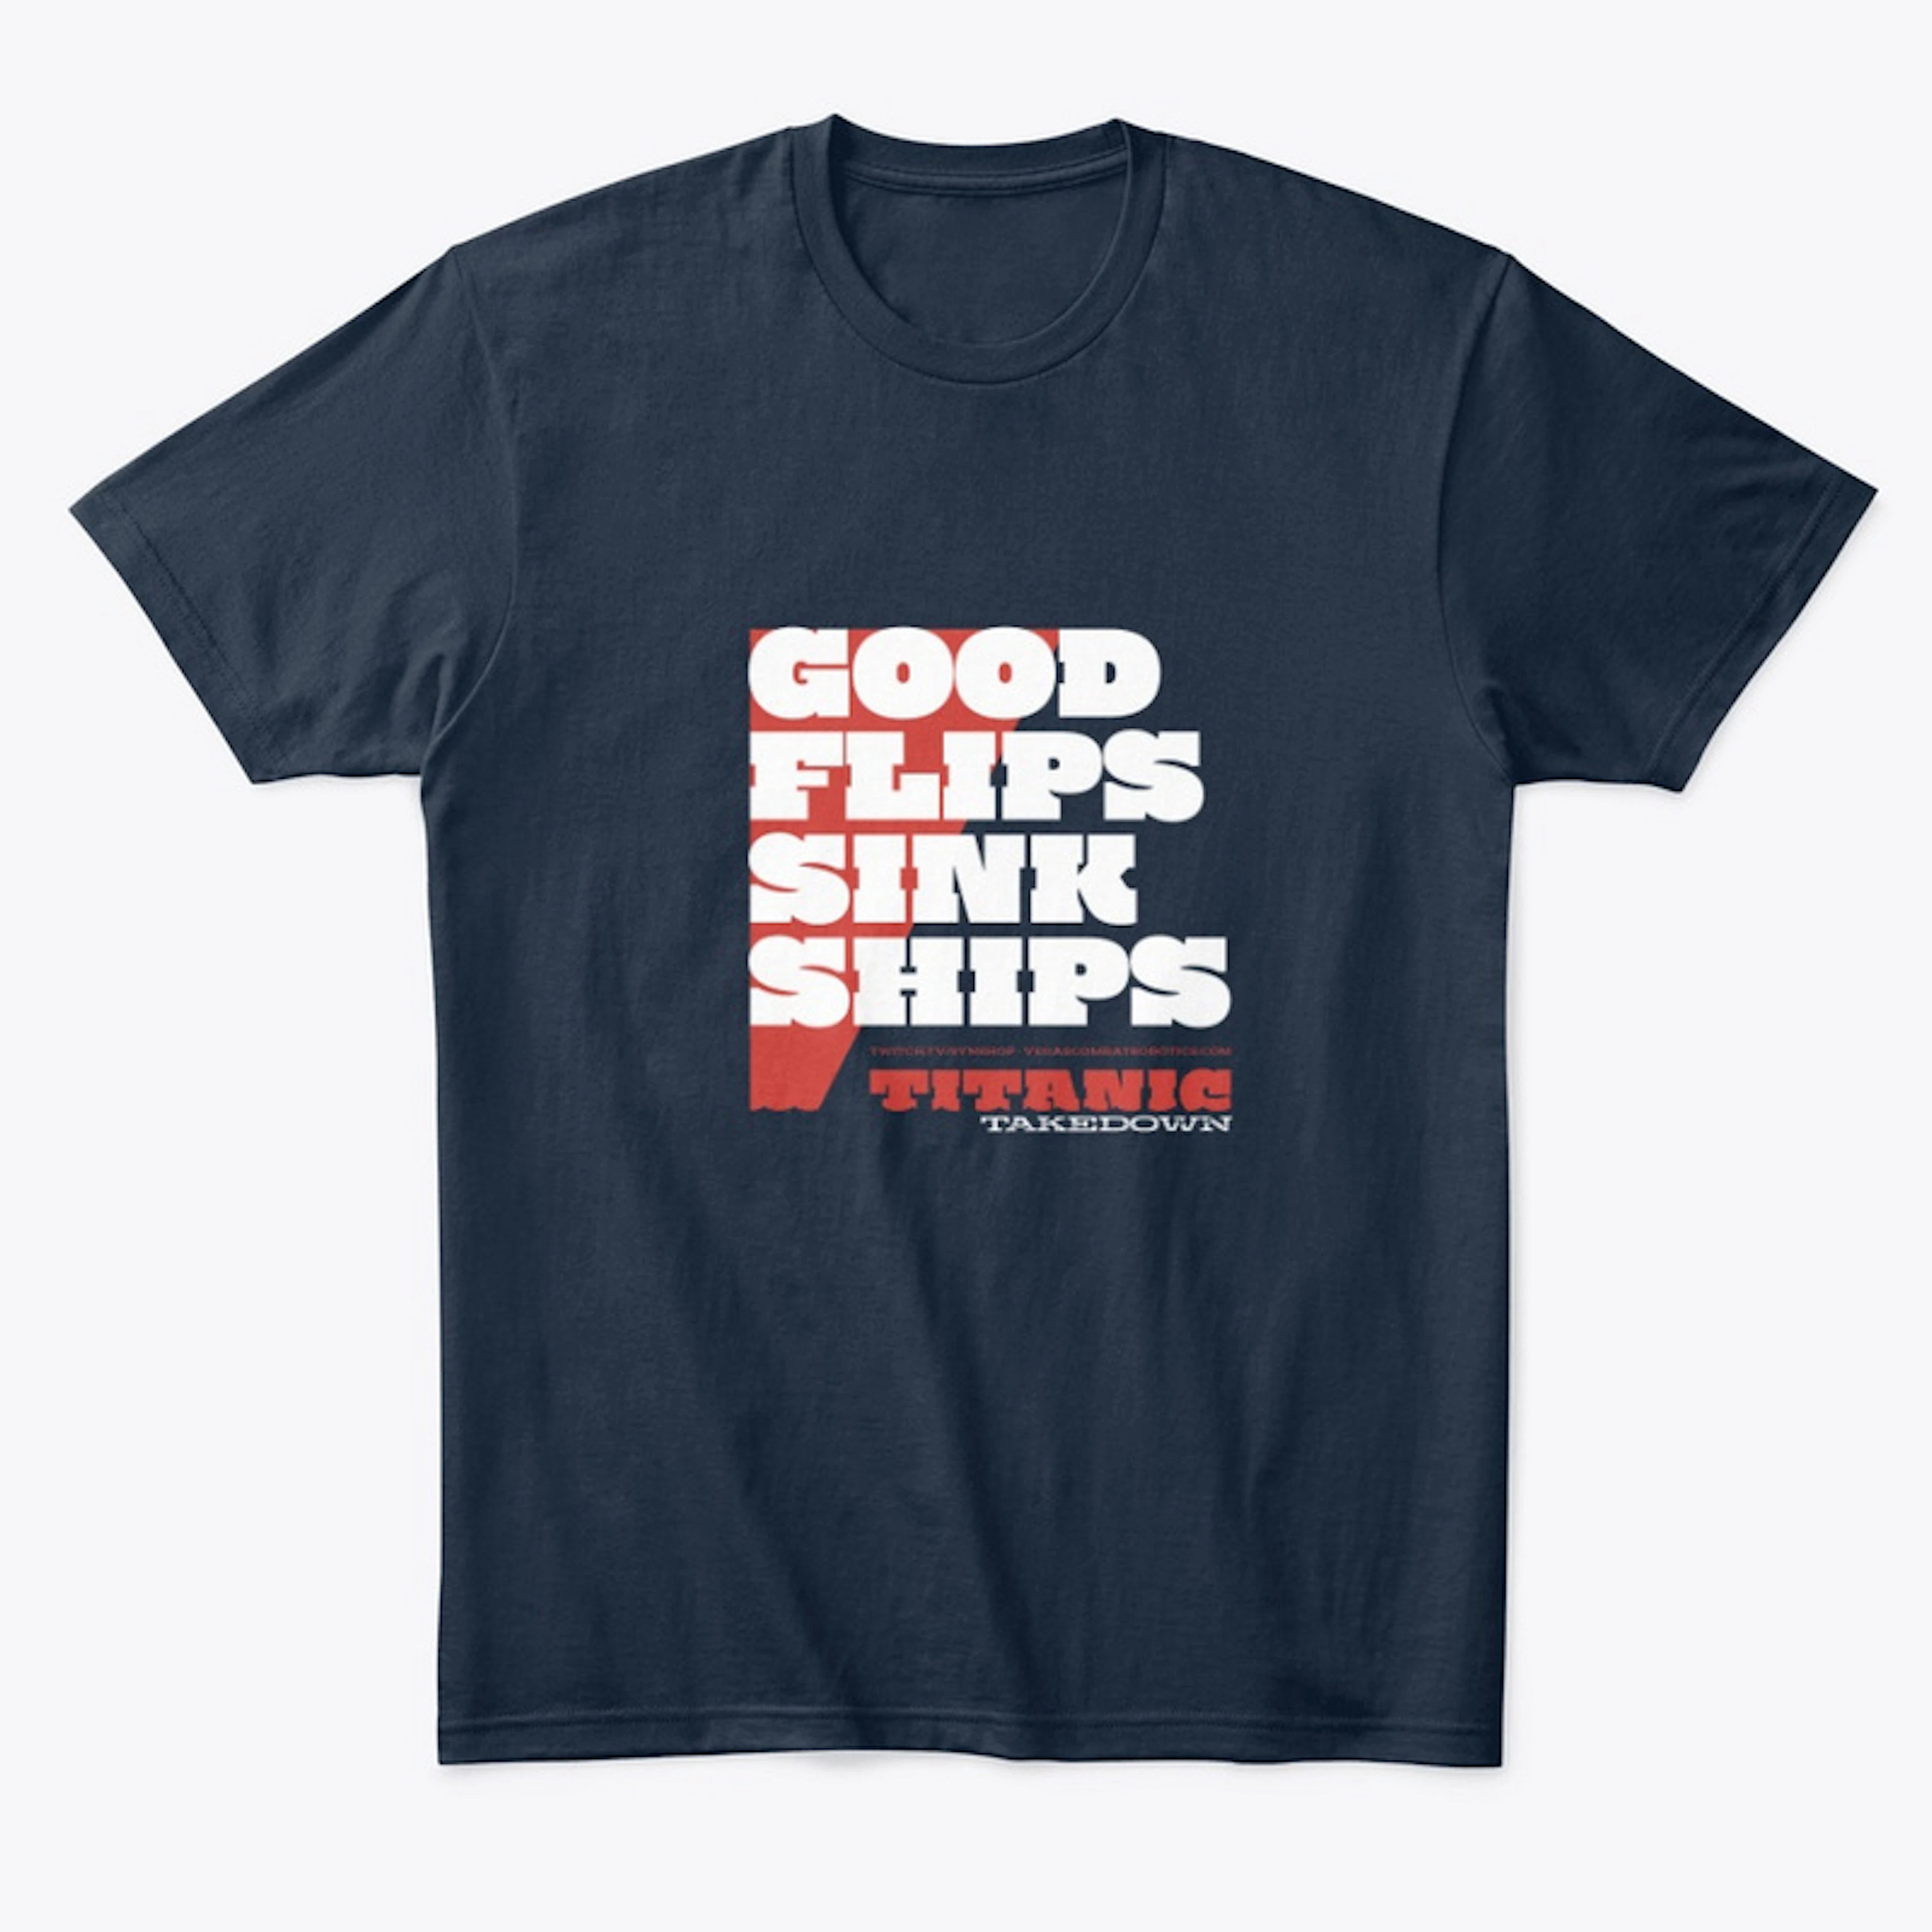 Good Flips Sink Ships! +BENCHY